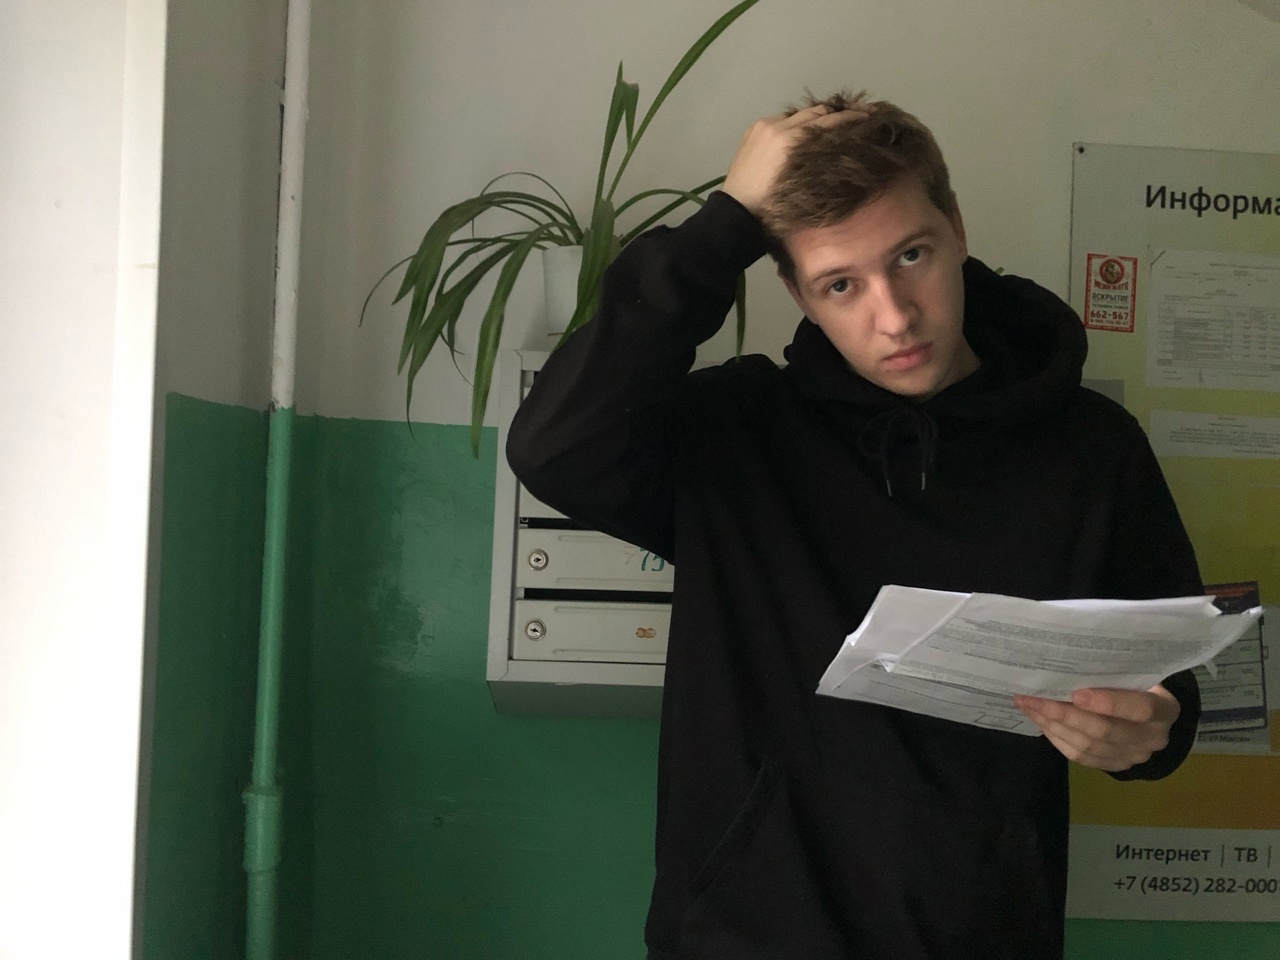 "Квартплата как ипотека": ярославцы в ужасе от резко подскочивших тарифов на коммуналку